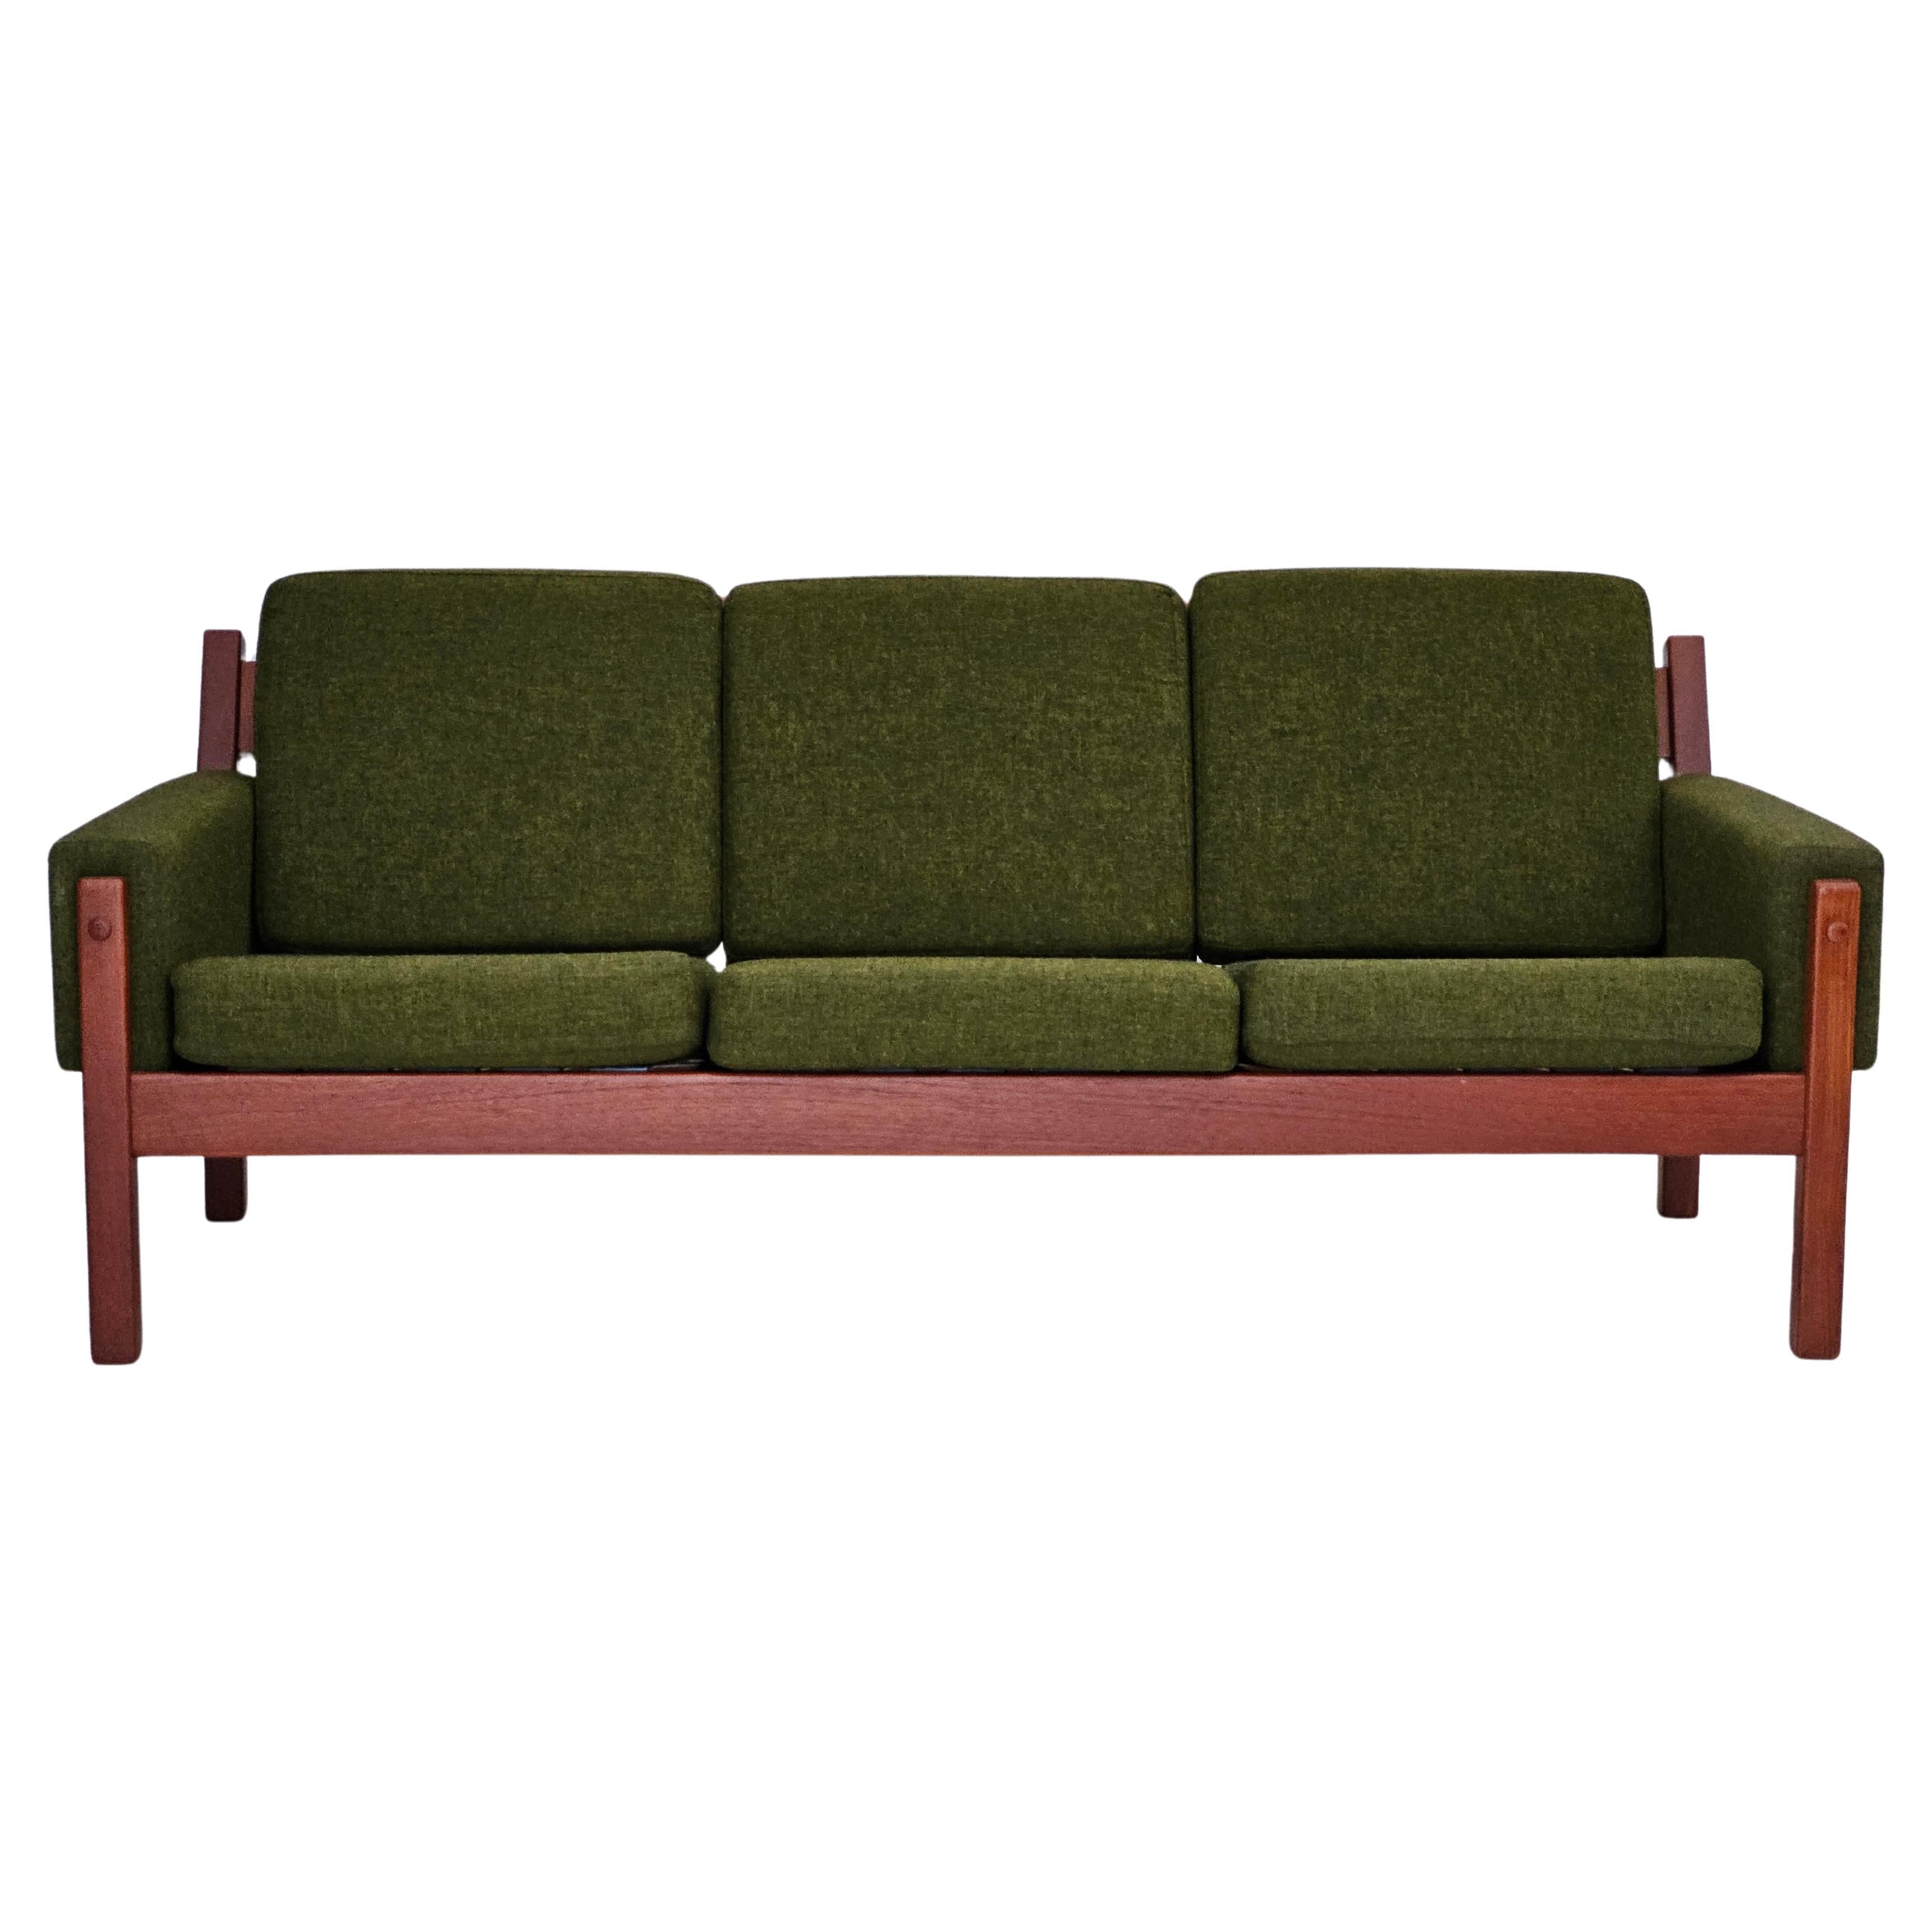 1970s, Danish 3 seater sofa, original very good condition, wool, teak wood.